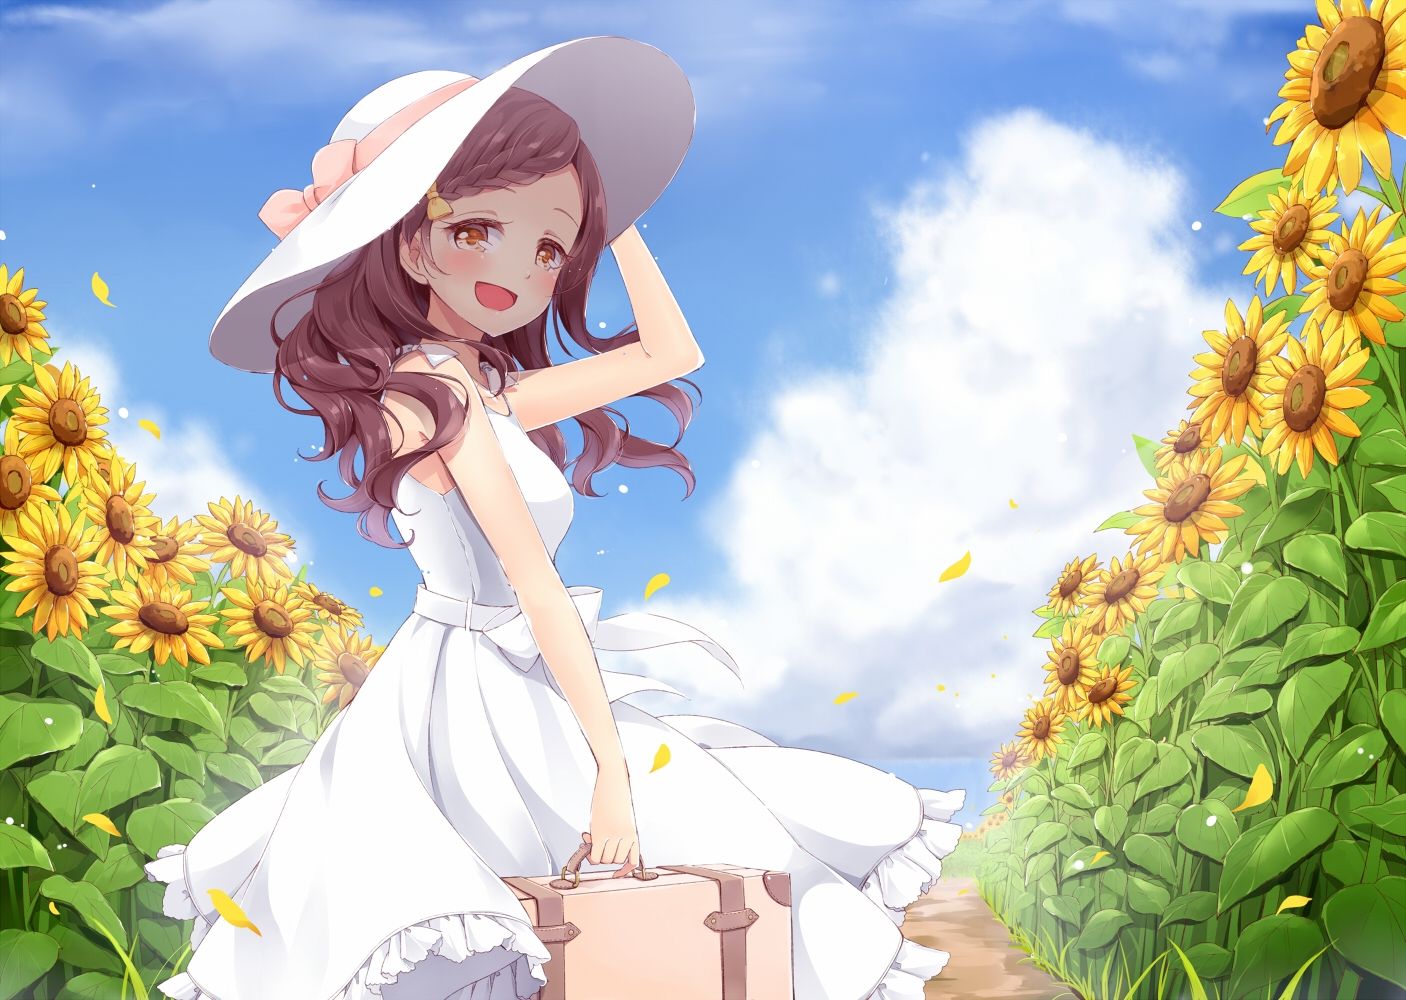 Download 1406x1000 Anime Girl, Summer, Sunflowers, Field, Big